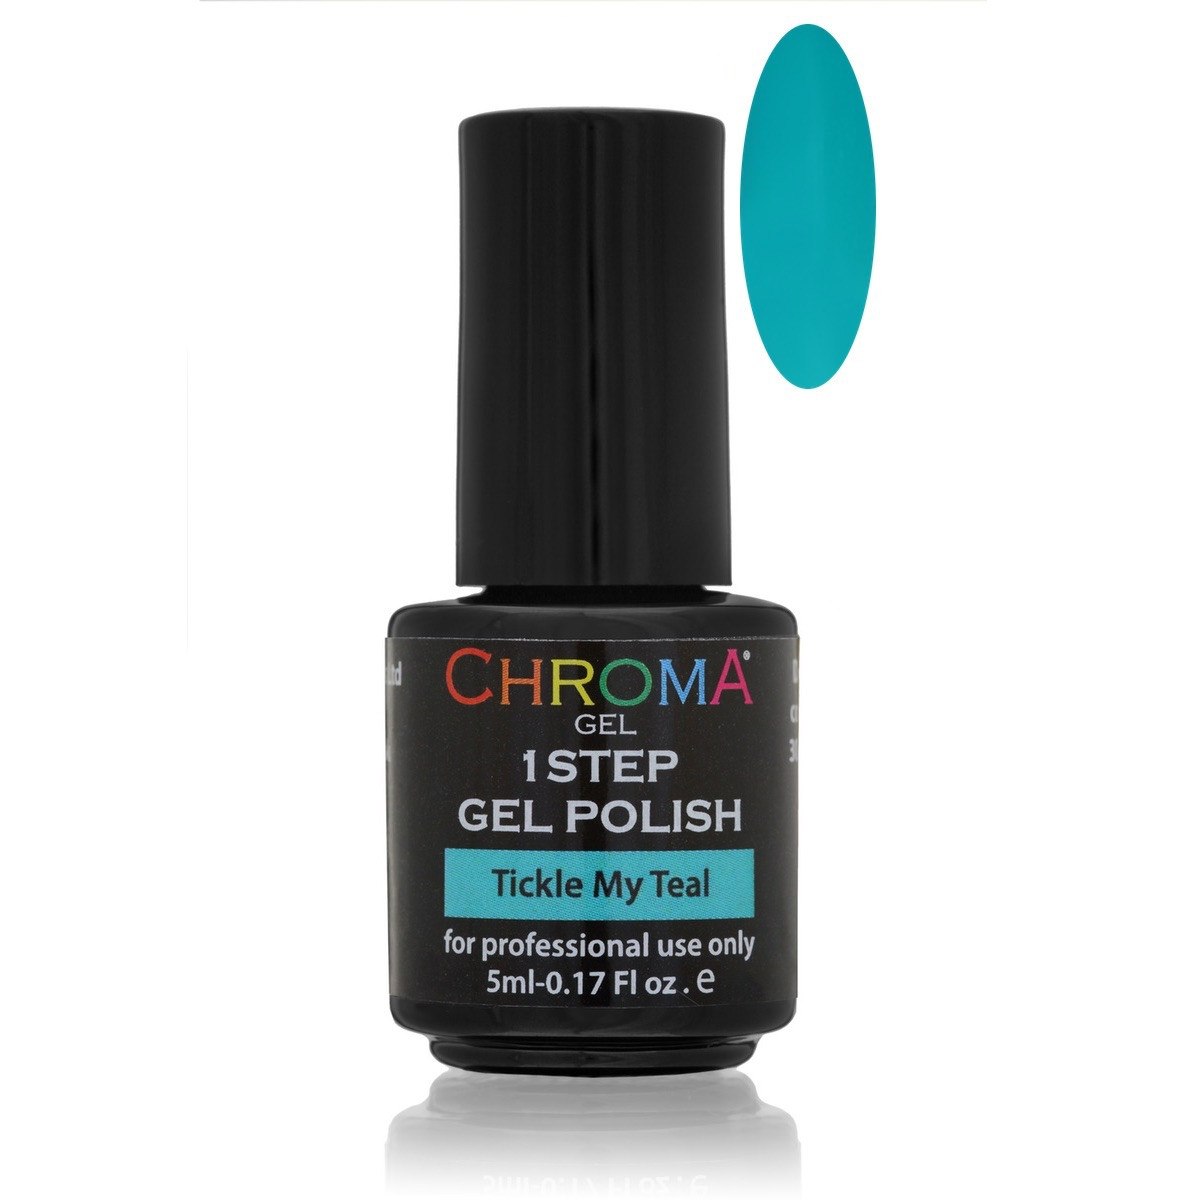 Chroma Gel 1 Step Gel Polish 5ml Tickle My Teal No.61 - Beauty Hair Products LtdChroma Gel